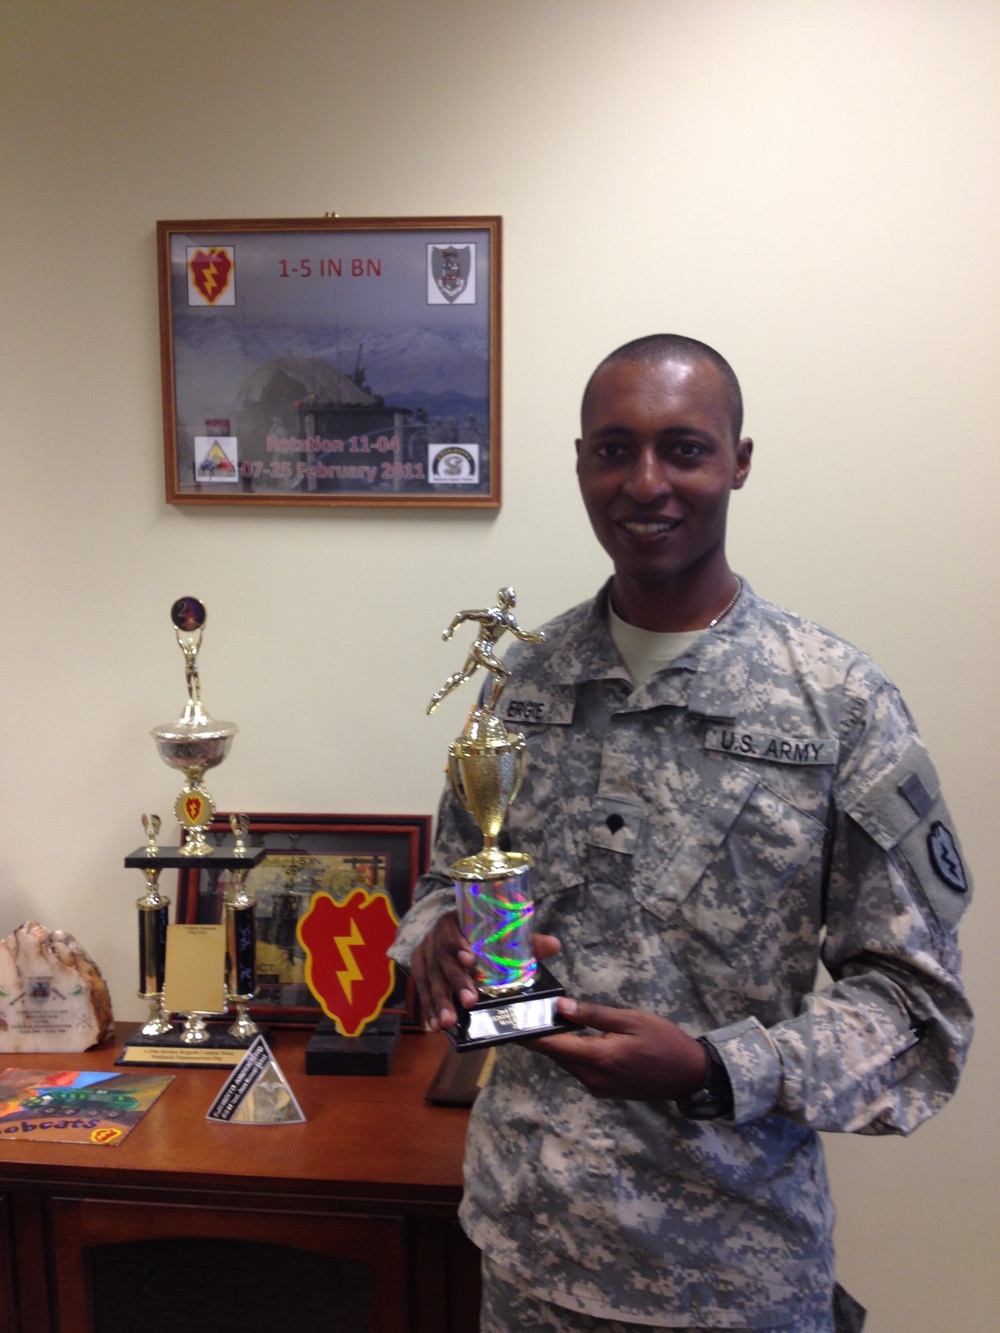 Medic runner inspires soldiers